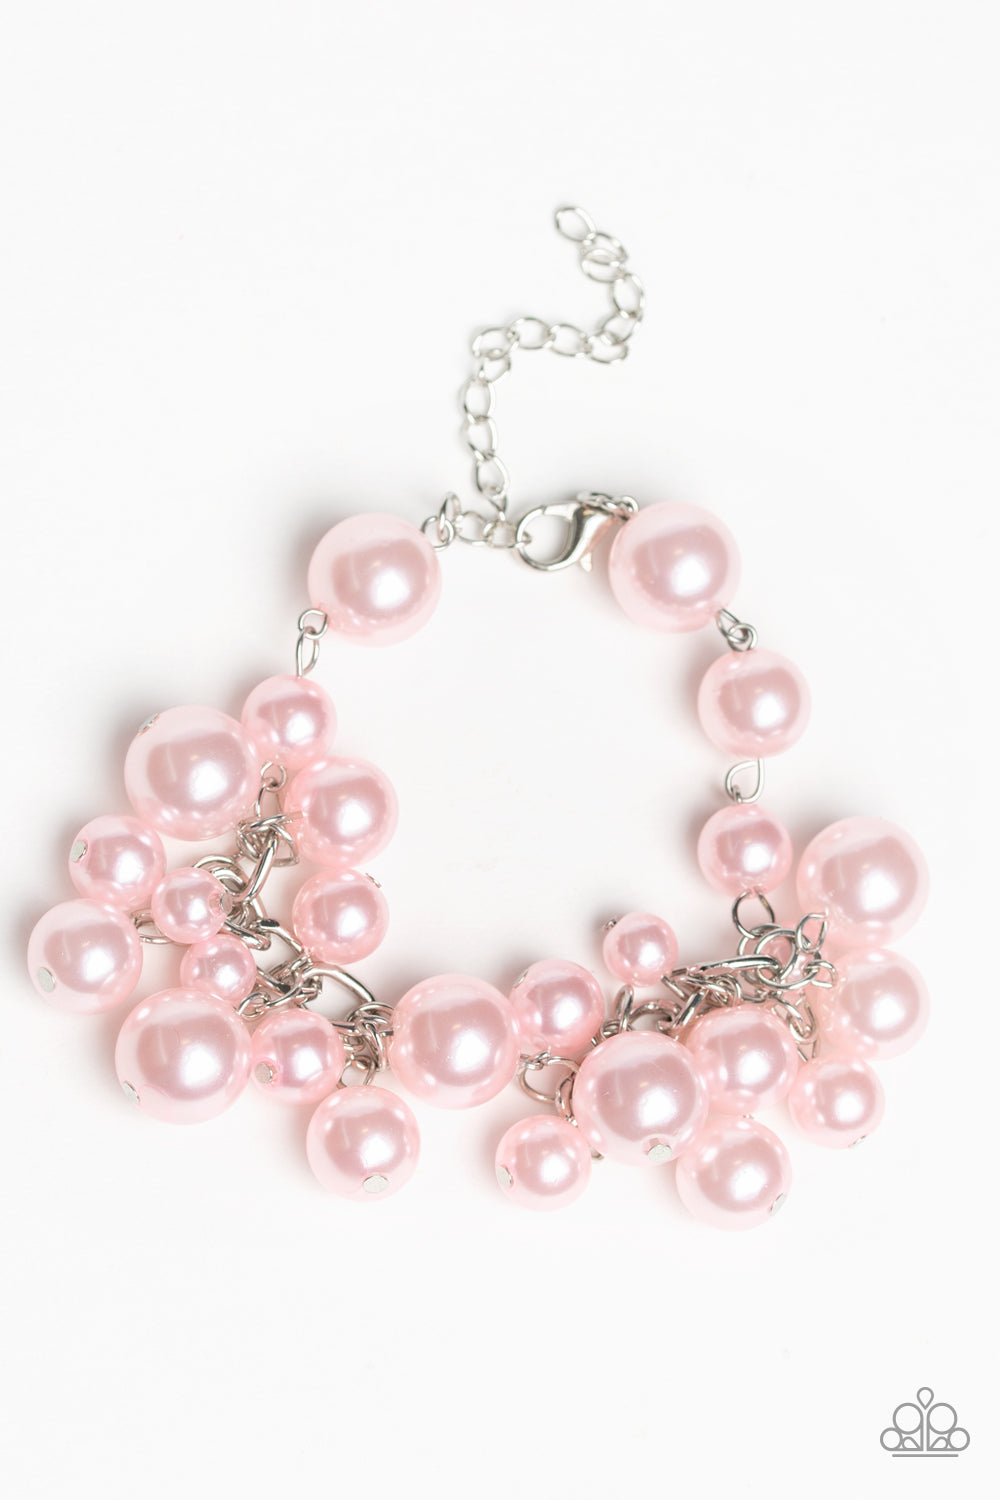 Girls in Pearls Pink Paparazzi Bracelets Cashmere Pink Jewels - Cashmere Pink Jewels & Accessories, Cashmere Pink Jewels & Accessories - Paparazzi